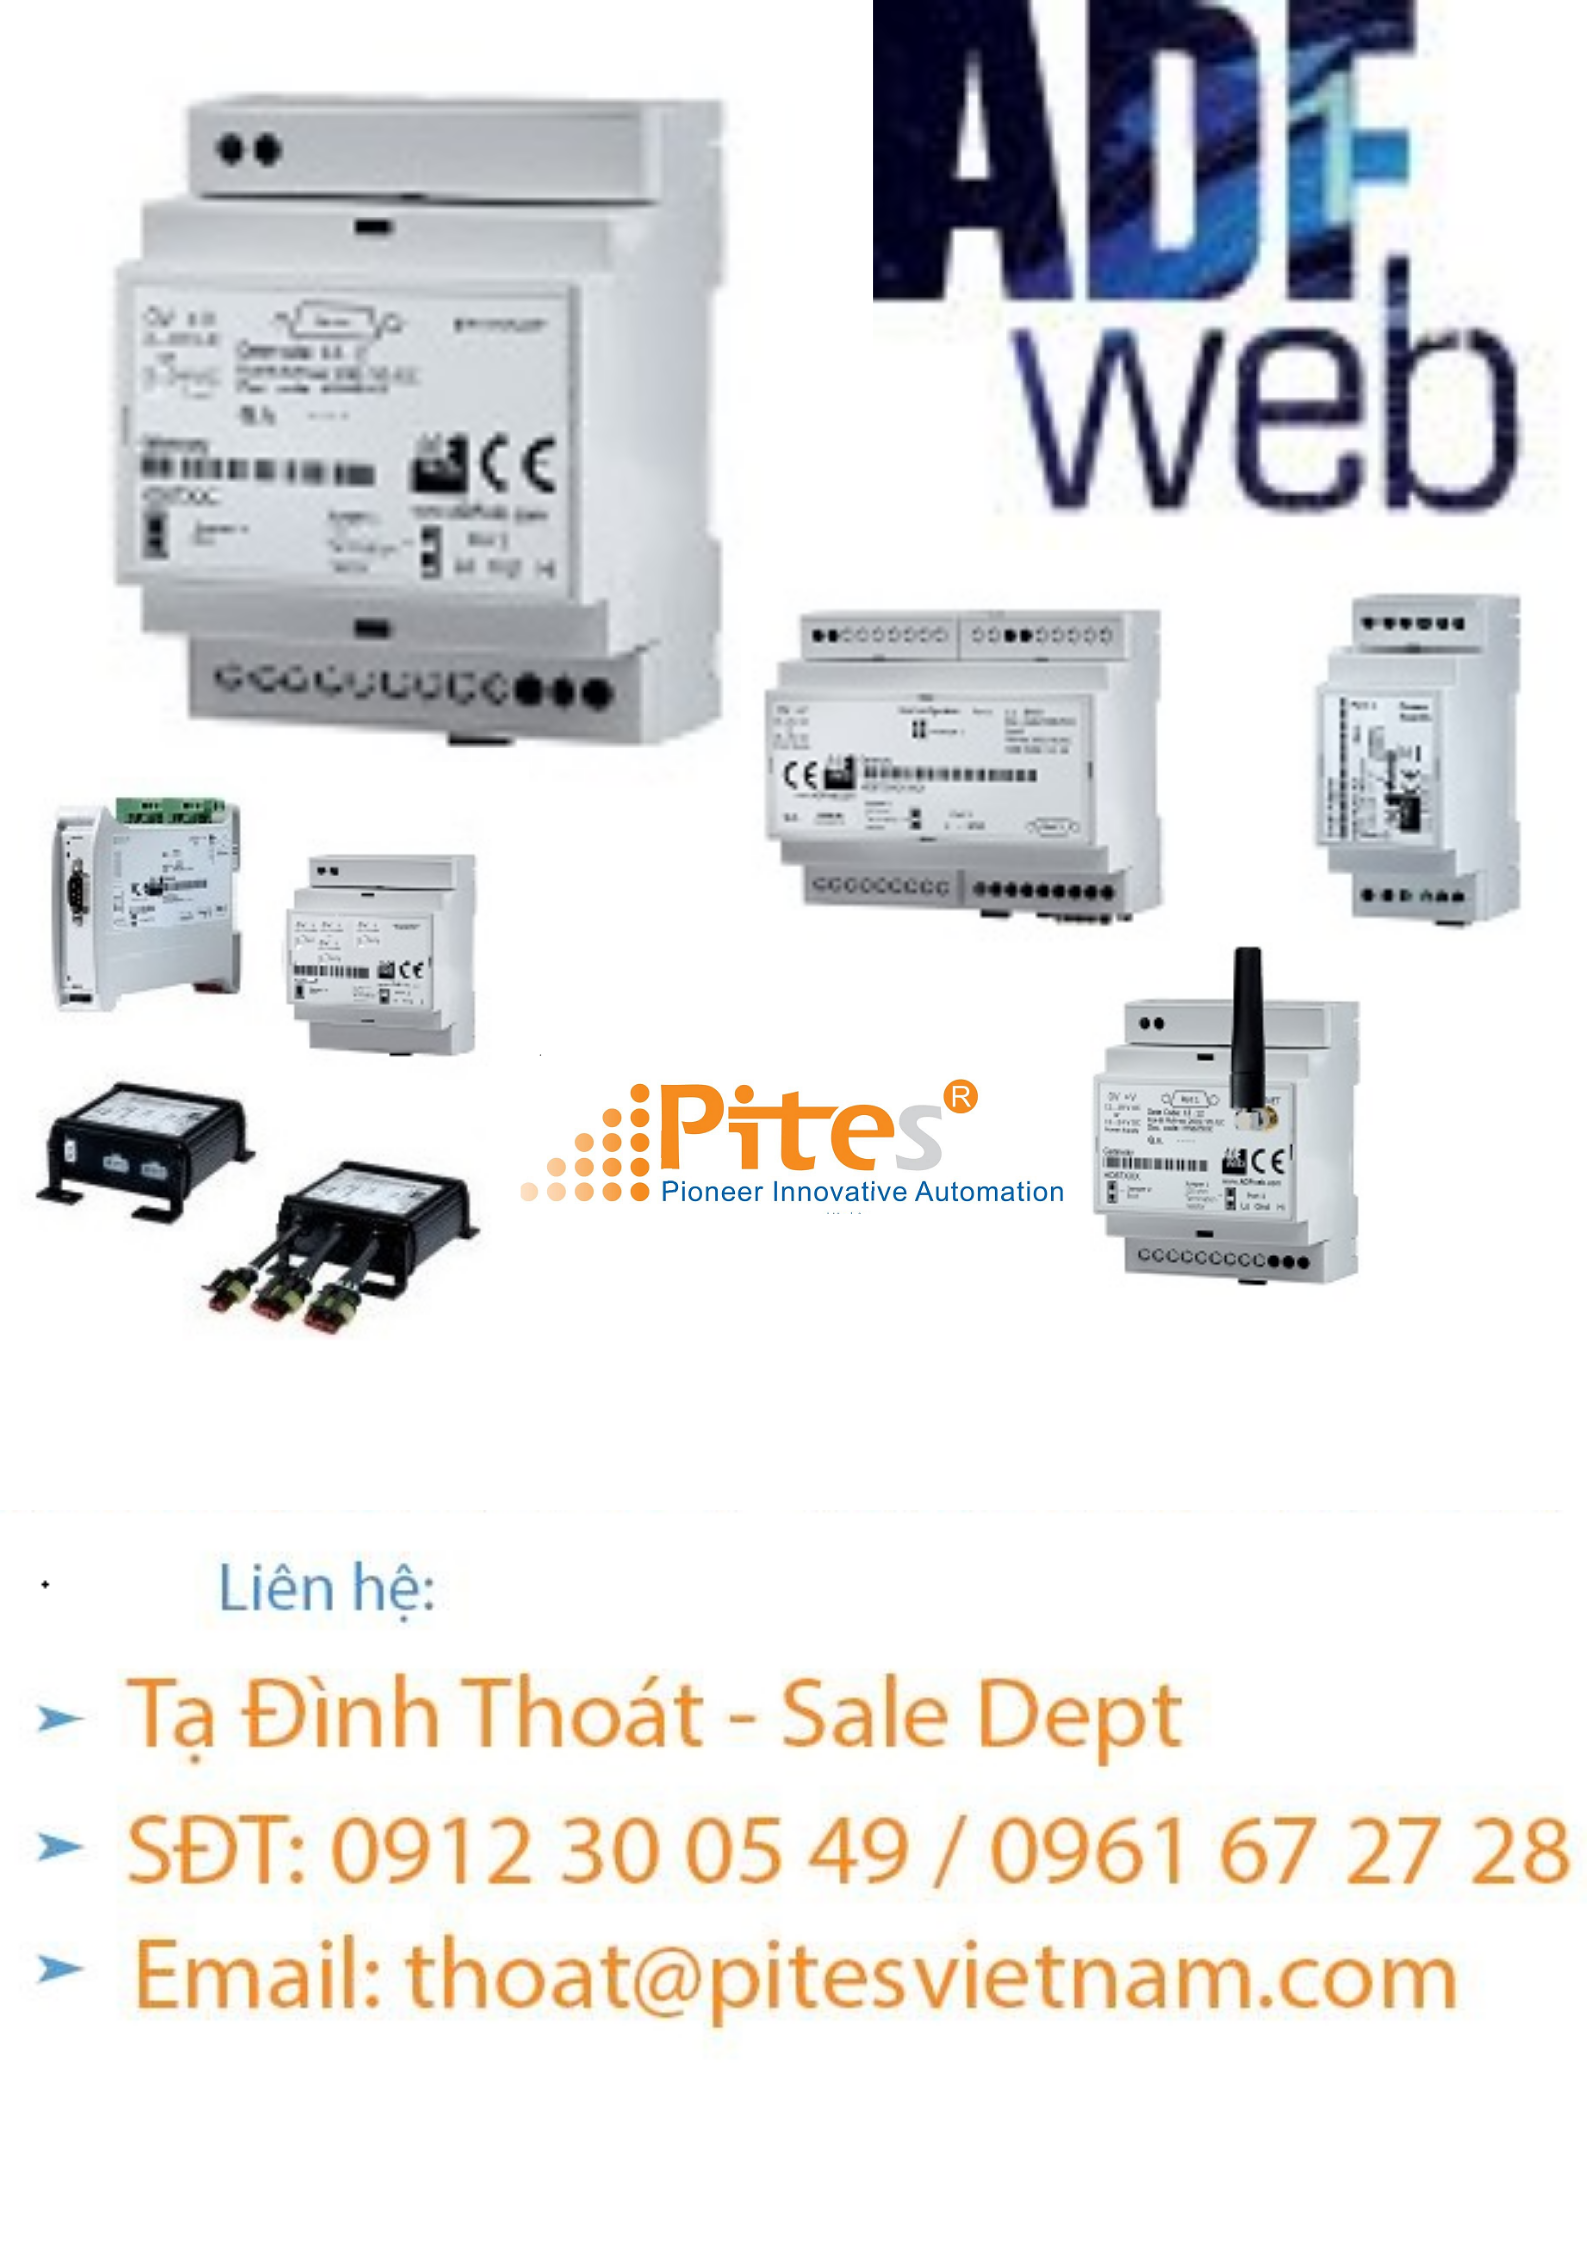 adf-web-vietnam-dai-ly-adfweb-viet-nam-hd67061-looping-redundancy-fiber-1.png